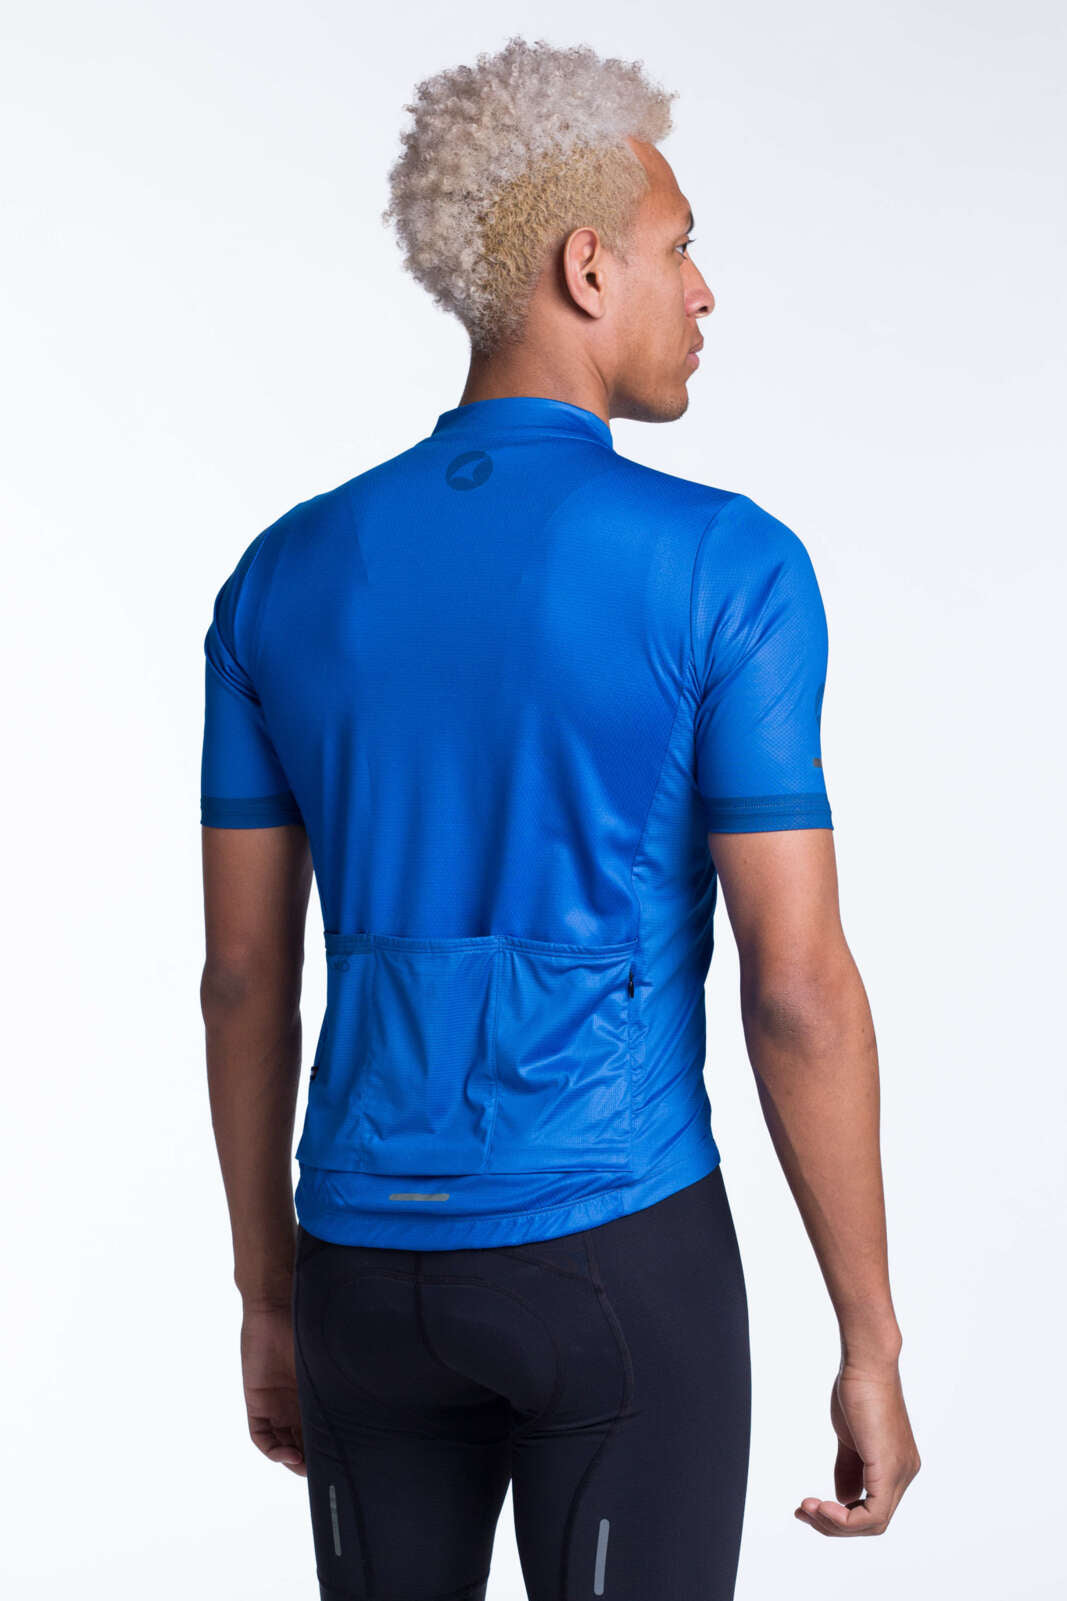 Men's Blue Bike Jersey - Ascent Back View